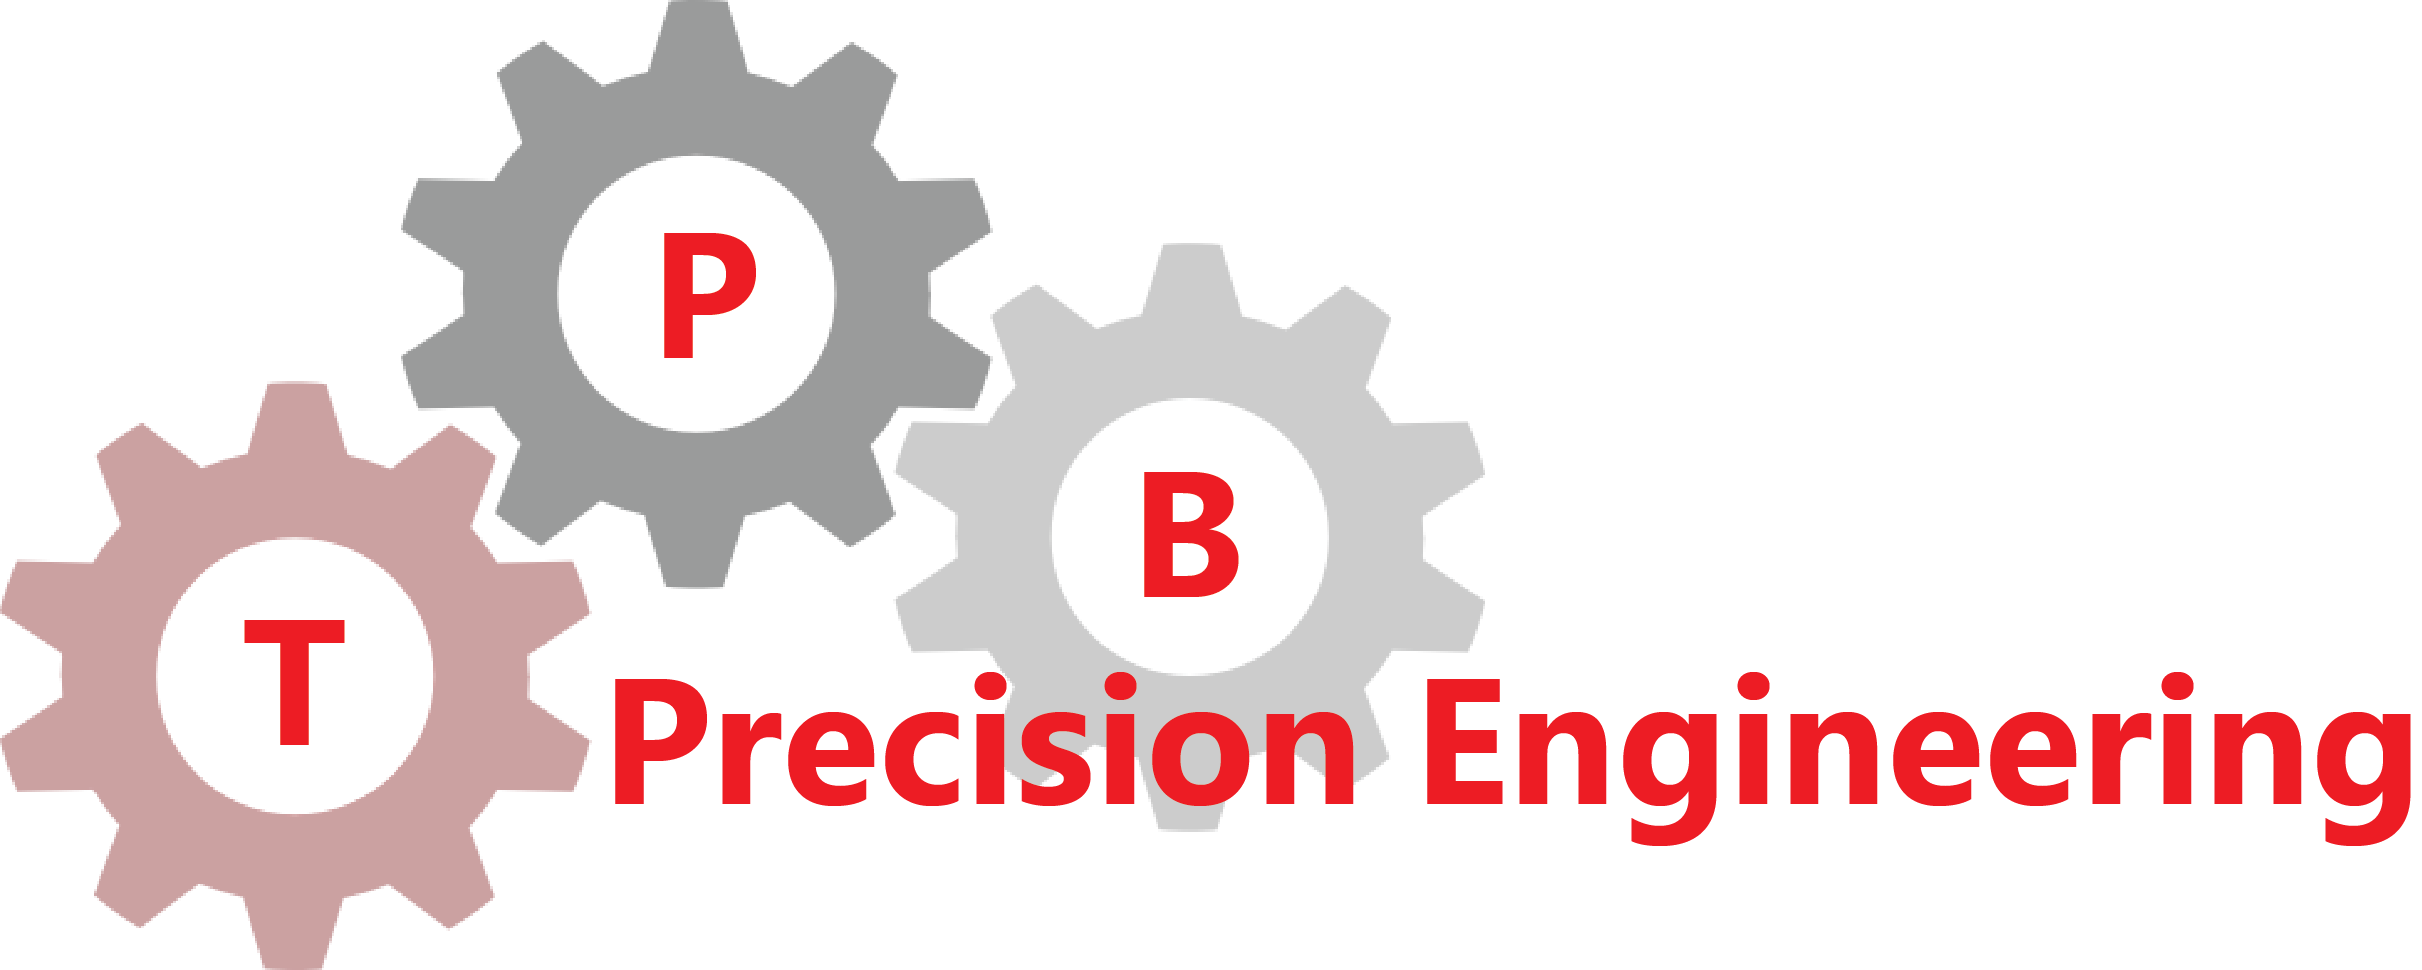 TPB Precision Engineering Ltd